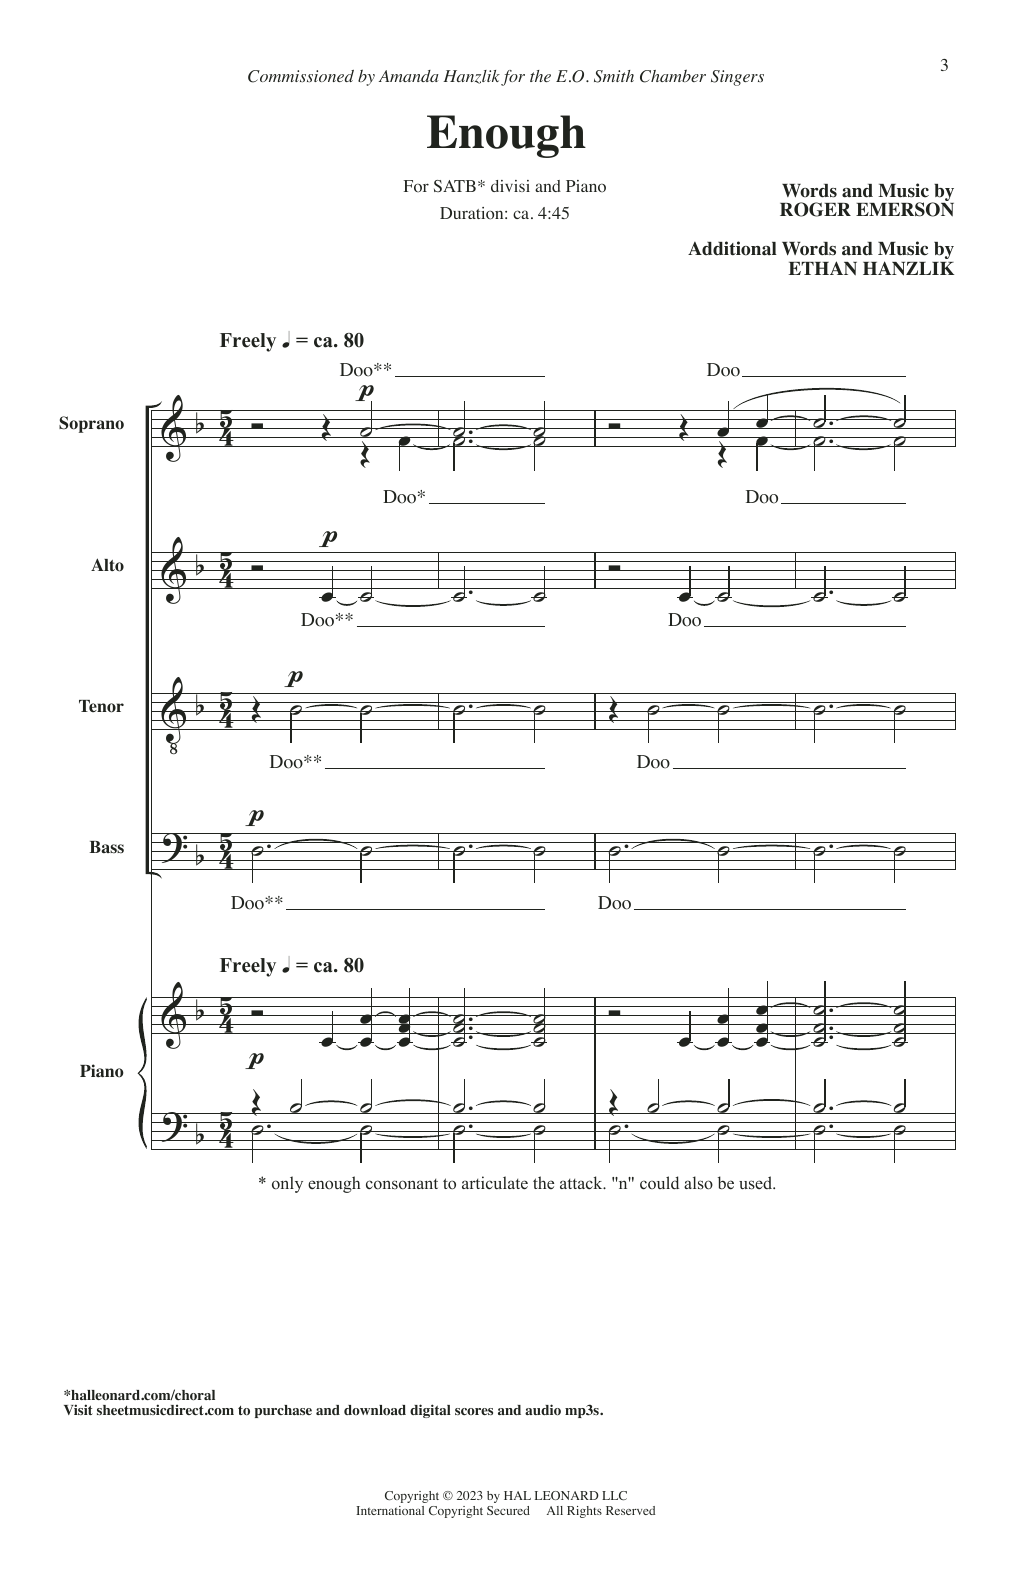 Roger Emerson and Ethan Hanzlik Enough Sheet Music Notes & Chords for SATB Choir - Download or Print PDF